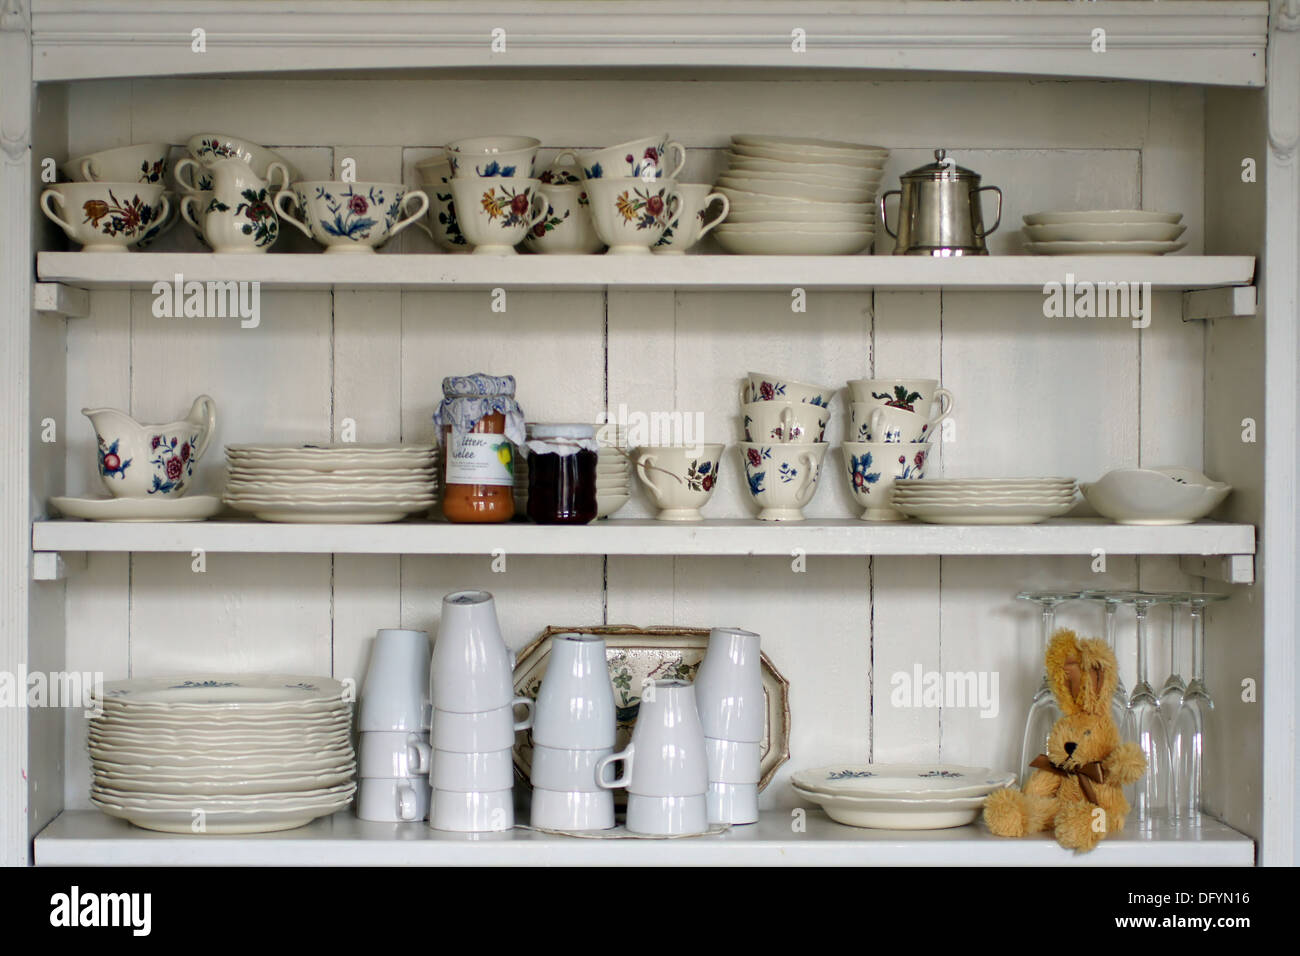 Old kitchen shelf Stock Photo